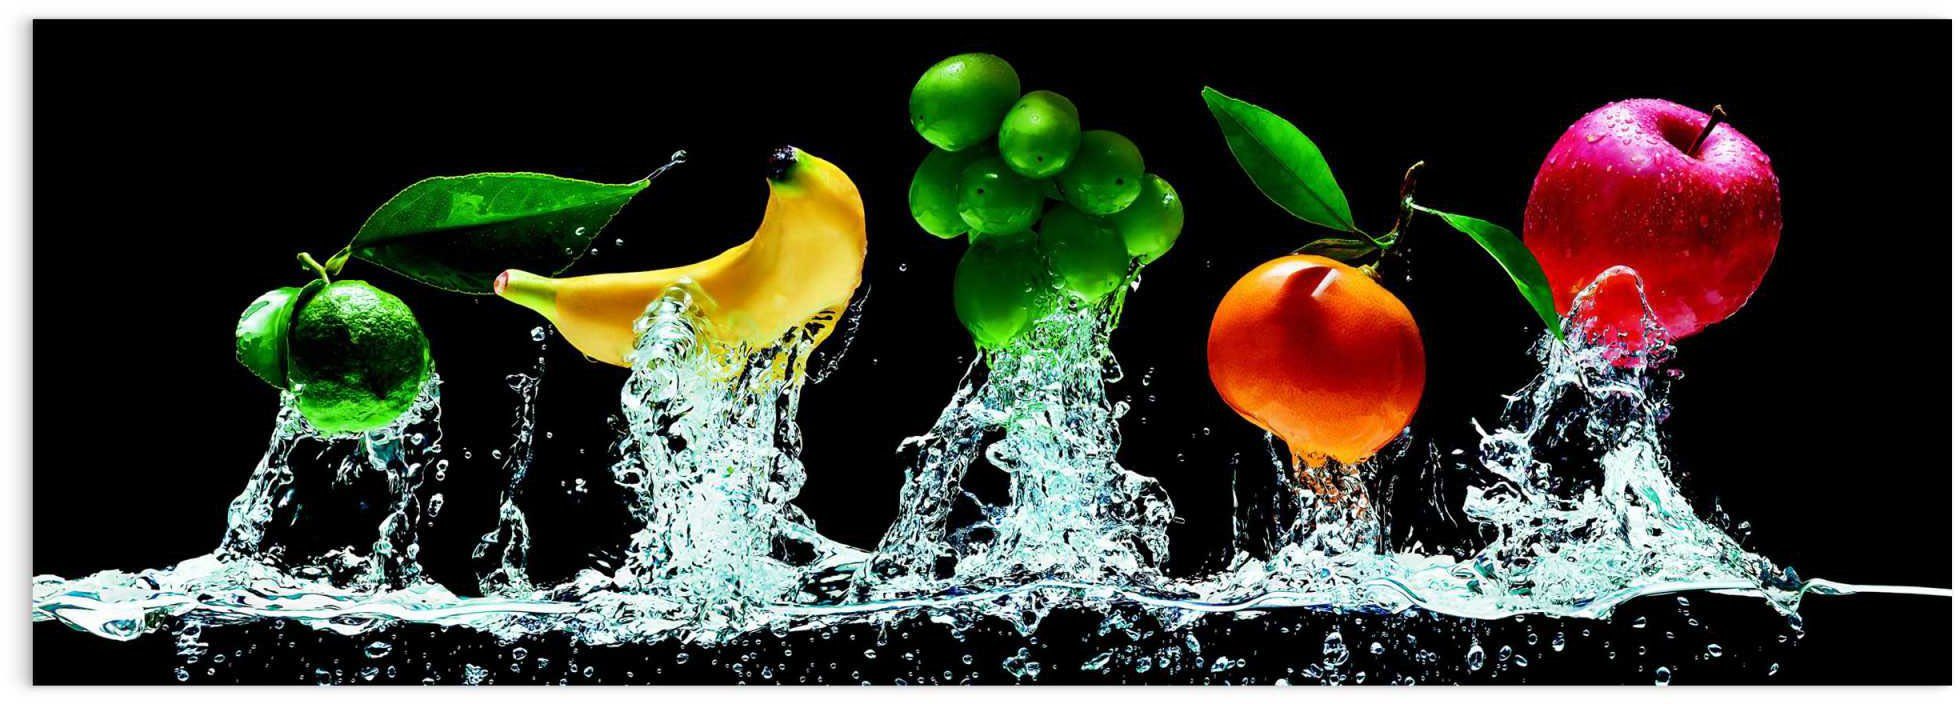 Glasbild - Reinders! Glasbild Tutti Frutti St) Farbenfroh, - Wasser (1 Obst Obst